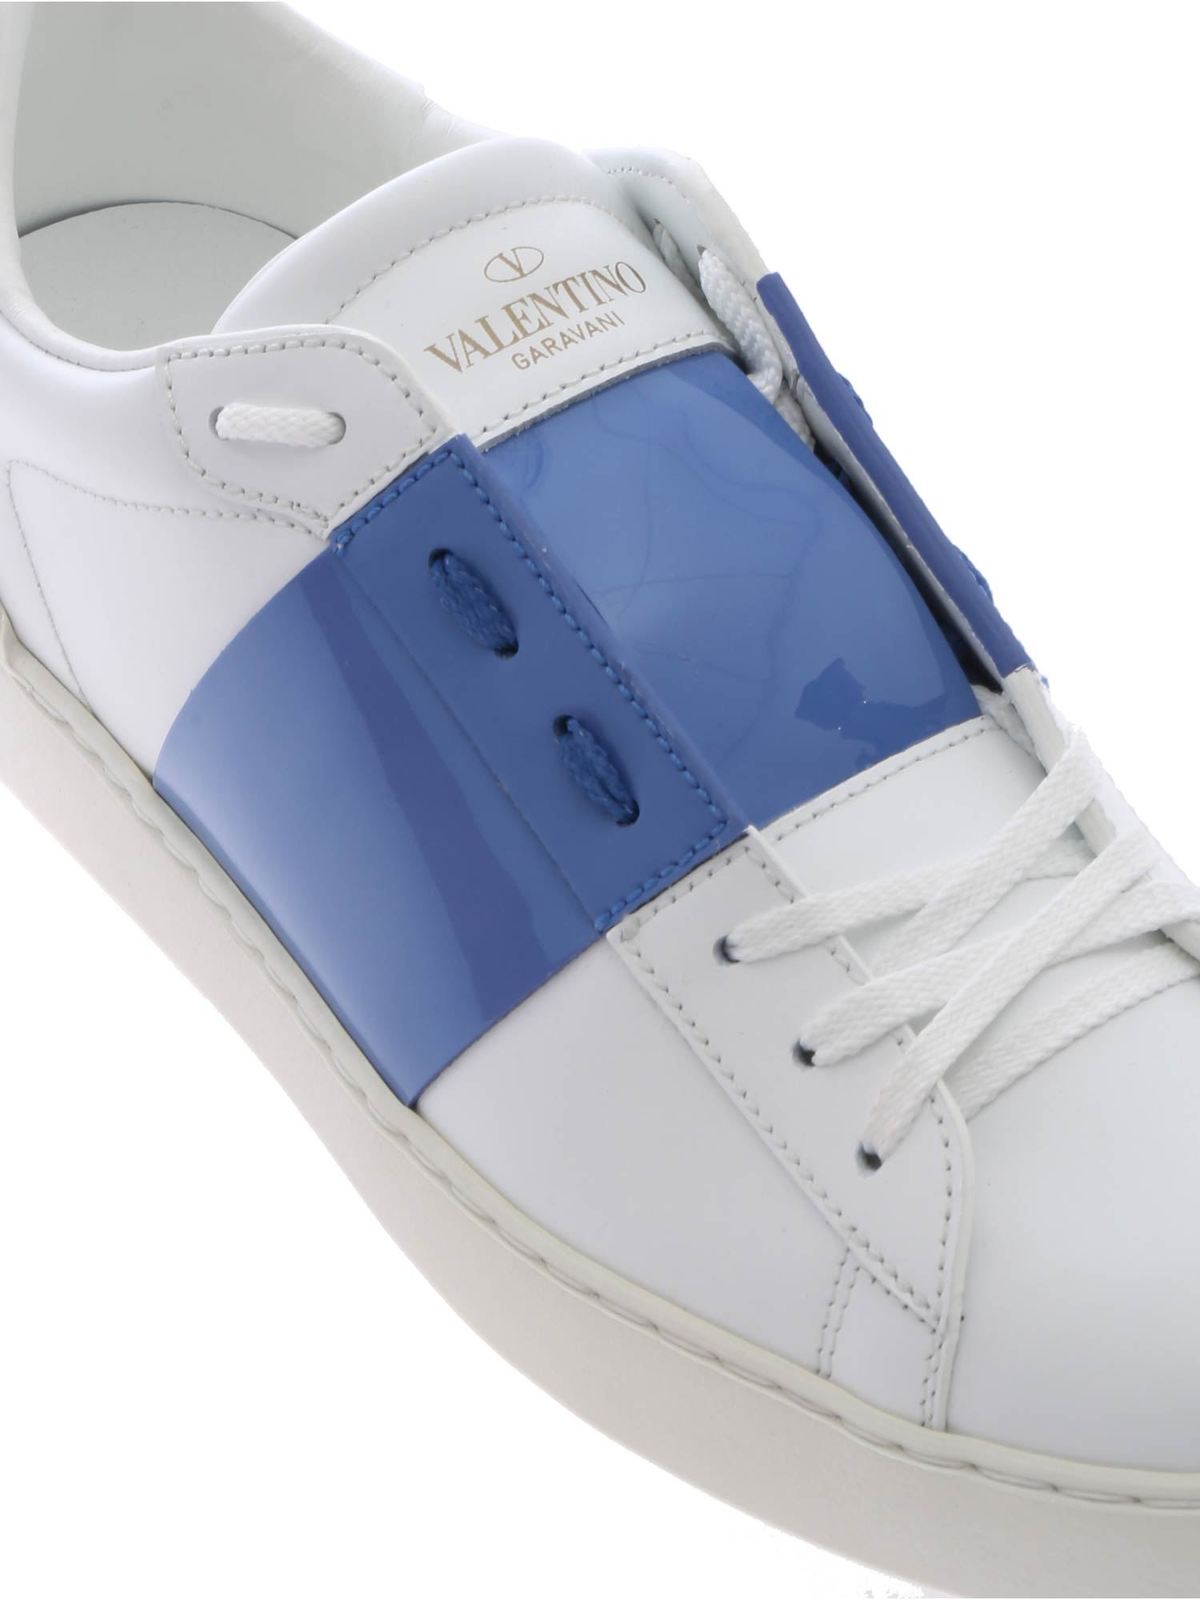 Trainers Valentino Garavani - Open sneakers in white and light blue ...